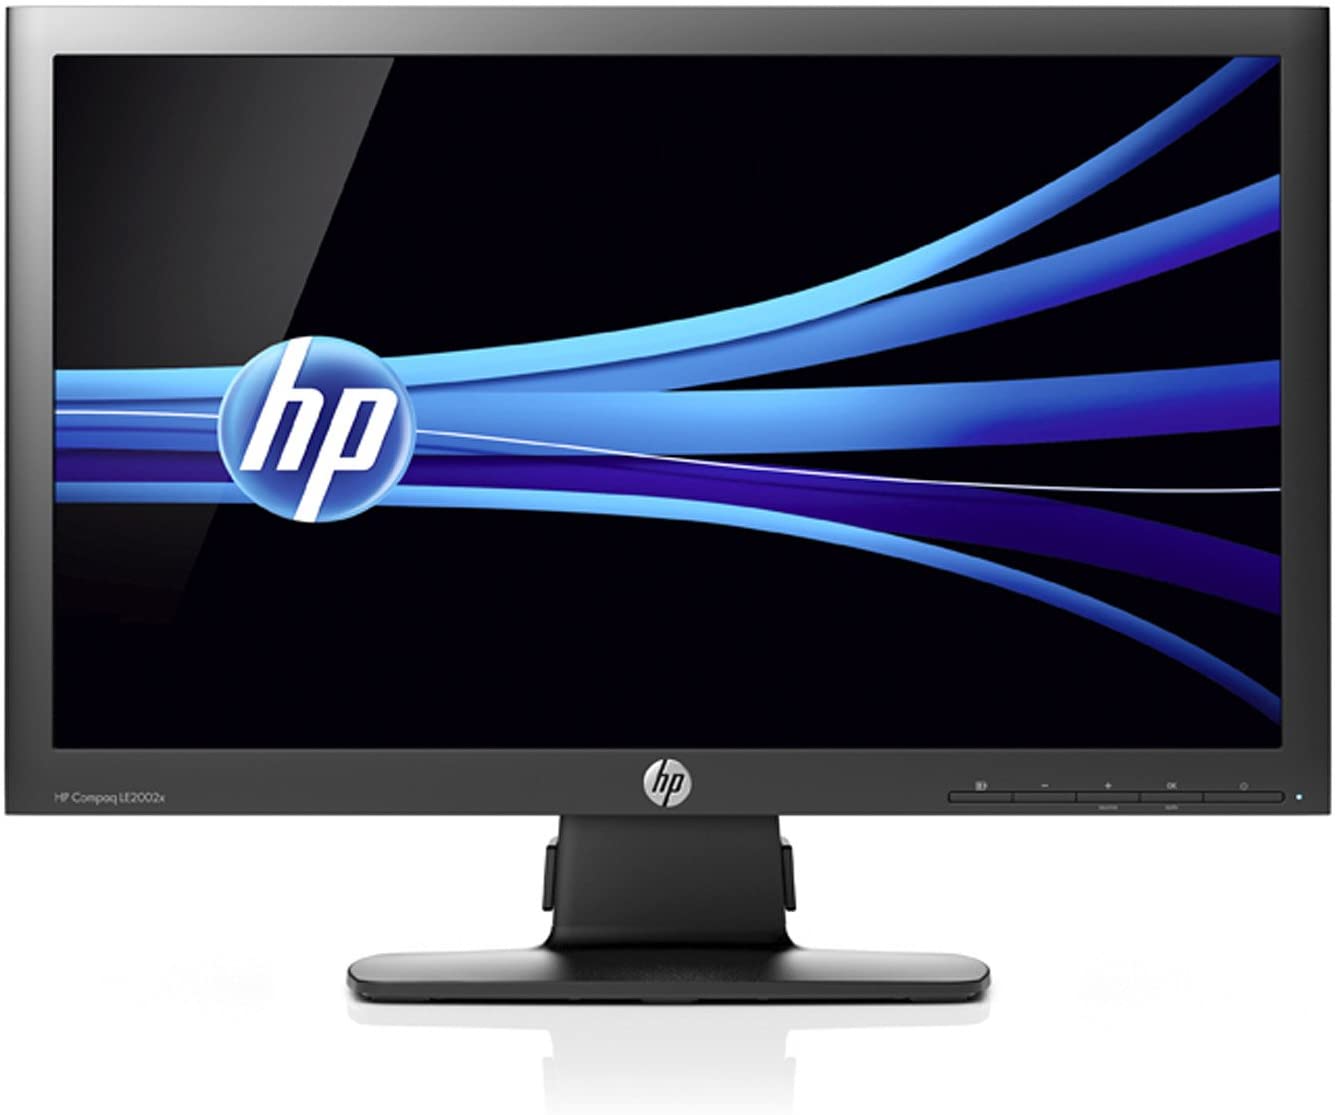 HP Compaq LE2002x LCD-Monitor 20 Zoll 1600 x 900 Pixel 16:9 Reaktionszeit 2 ms Kontrast 1000:1 Helligkeit 250 cd/m²